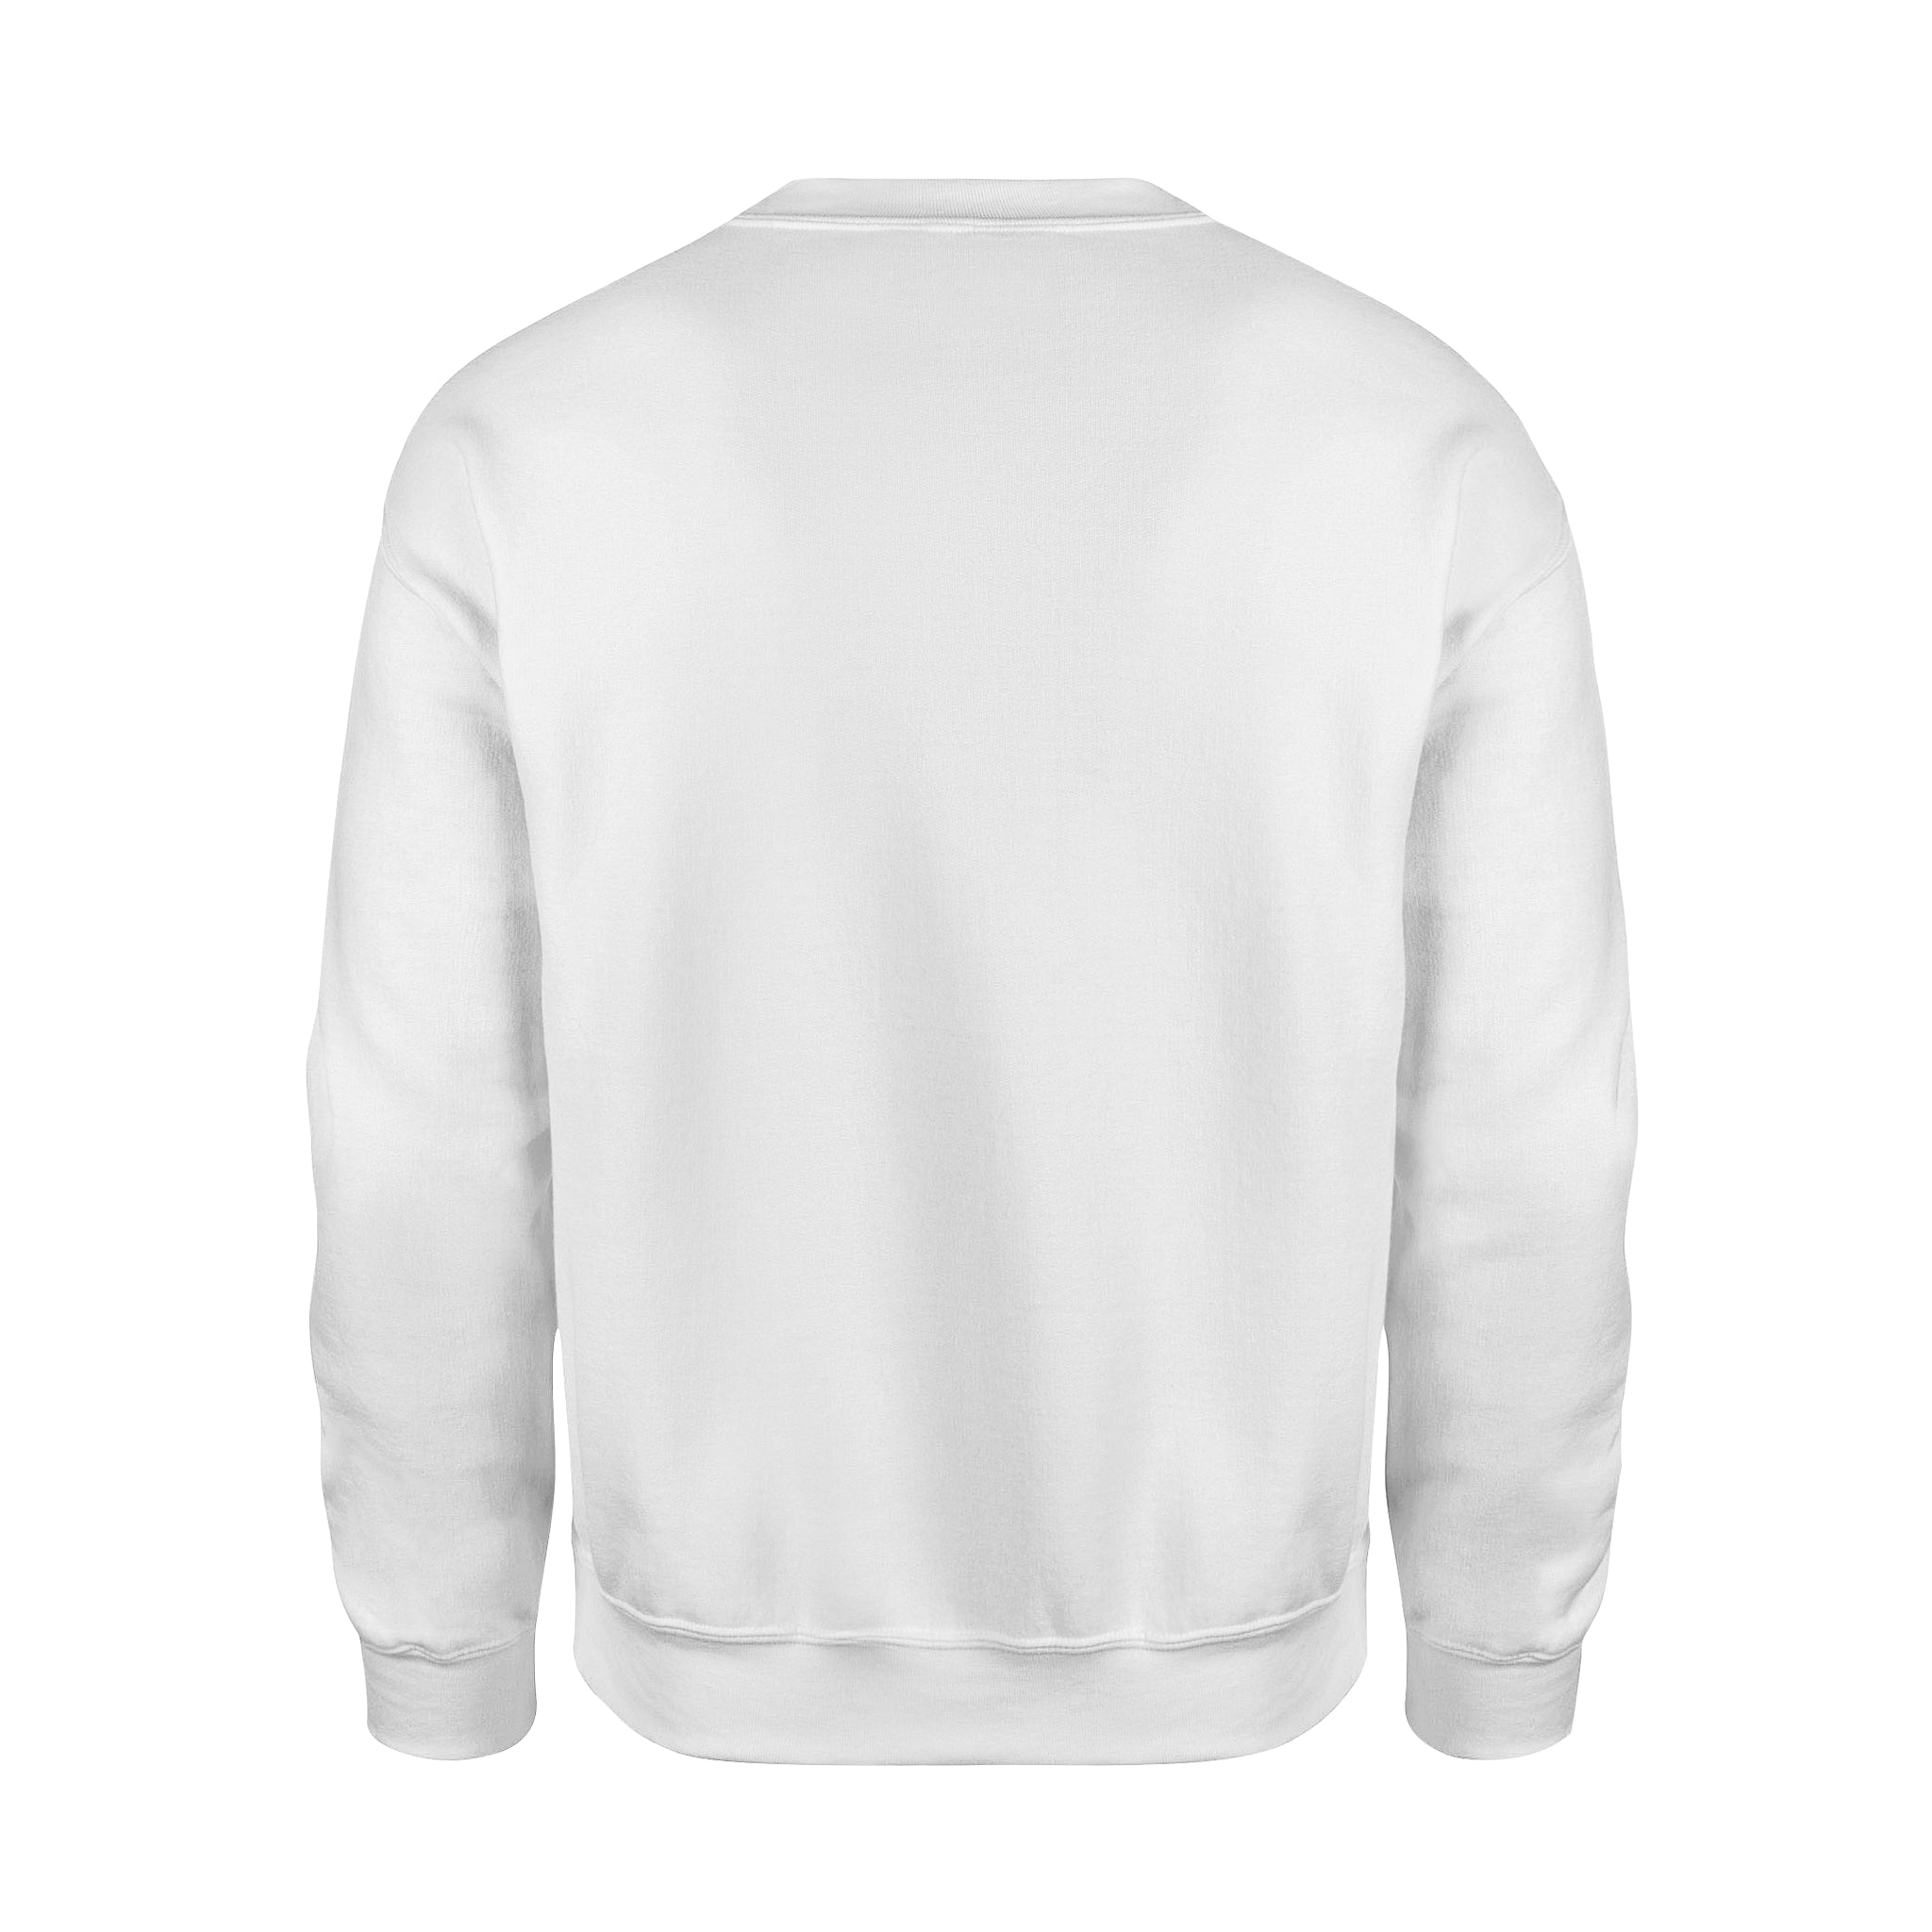 If Not Now When - Fleece Sweatshirt